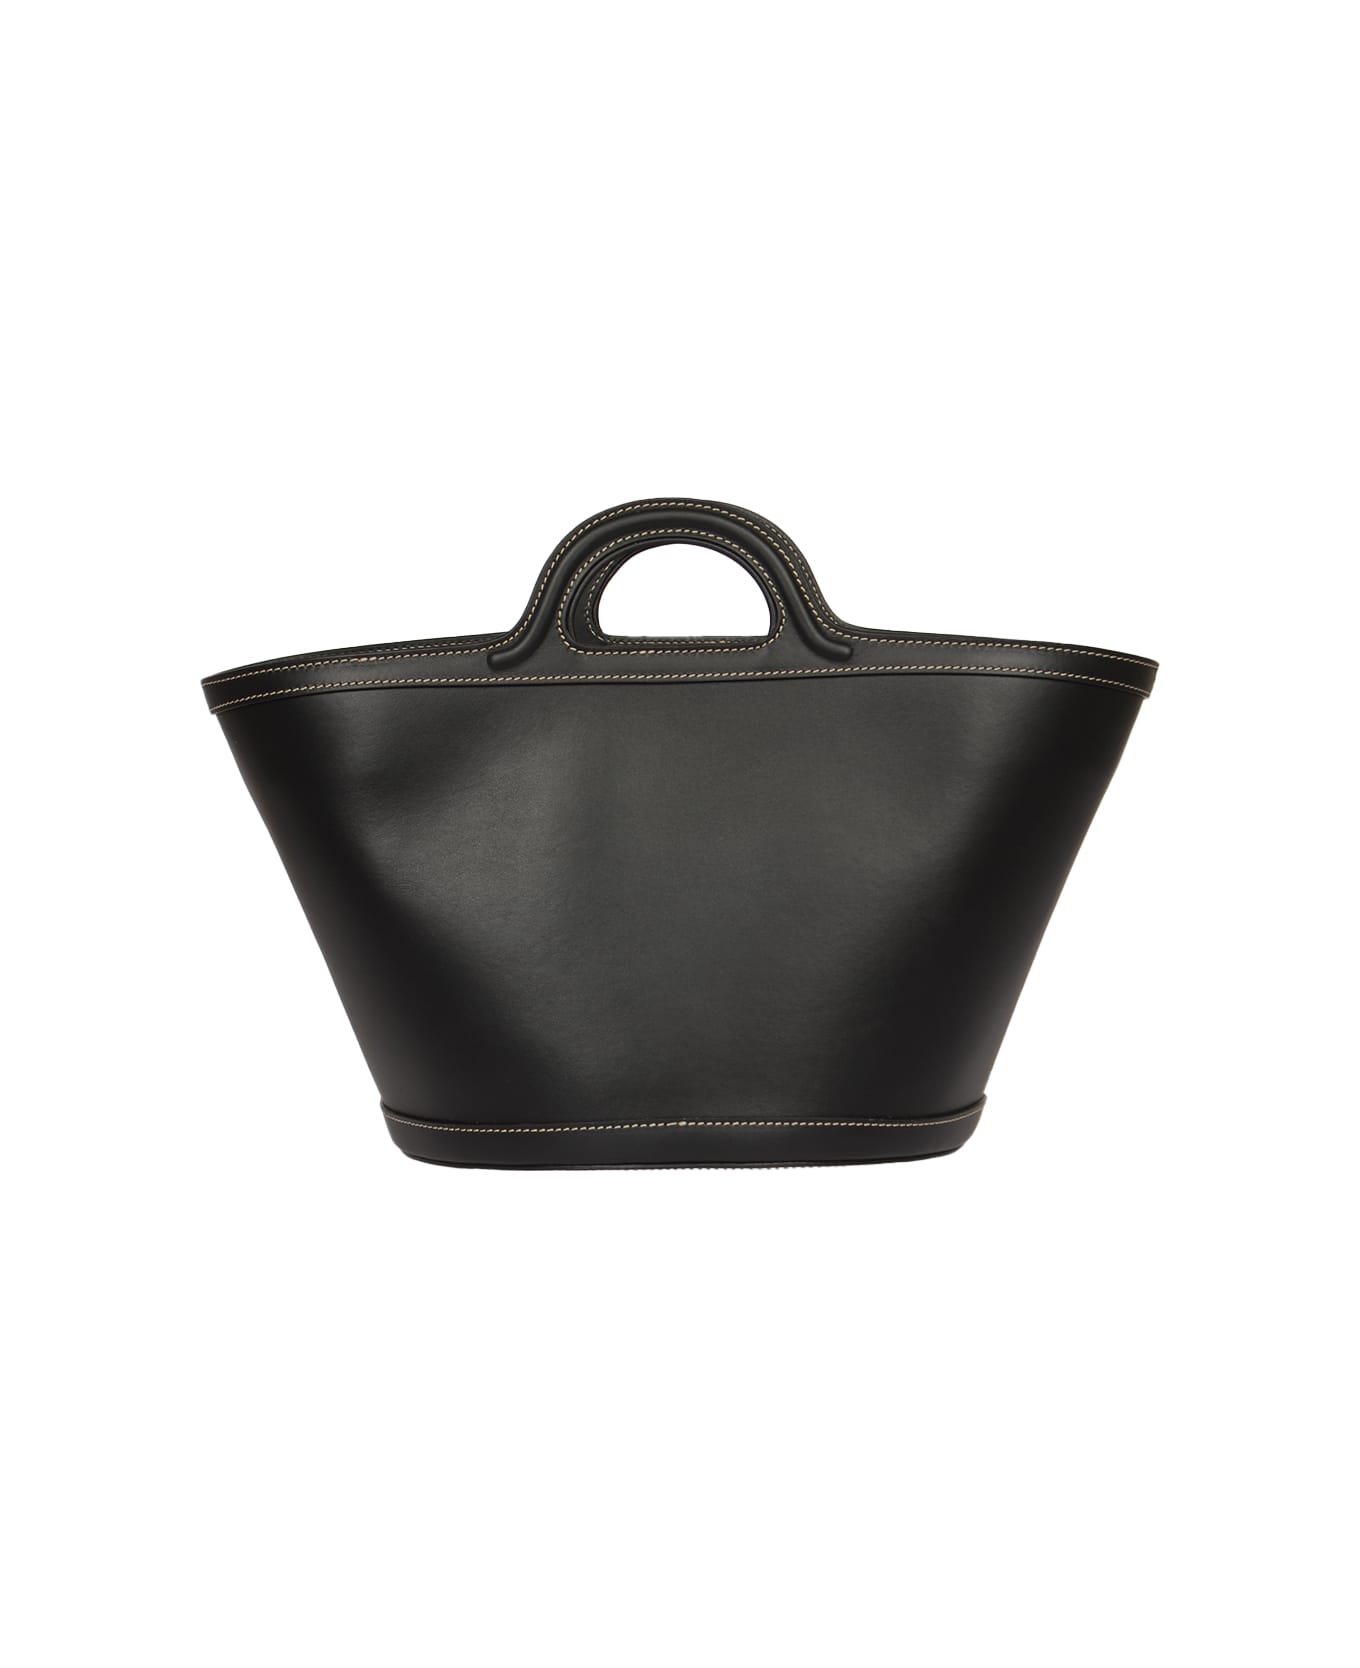 Marni Leather Small Tropicalia Bucket Bag - Black